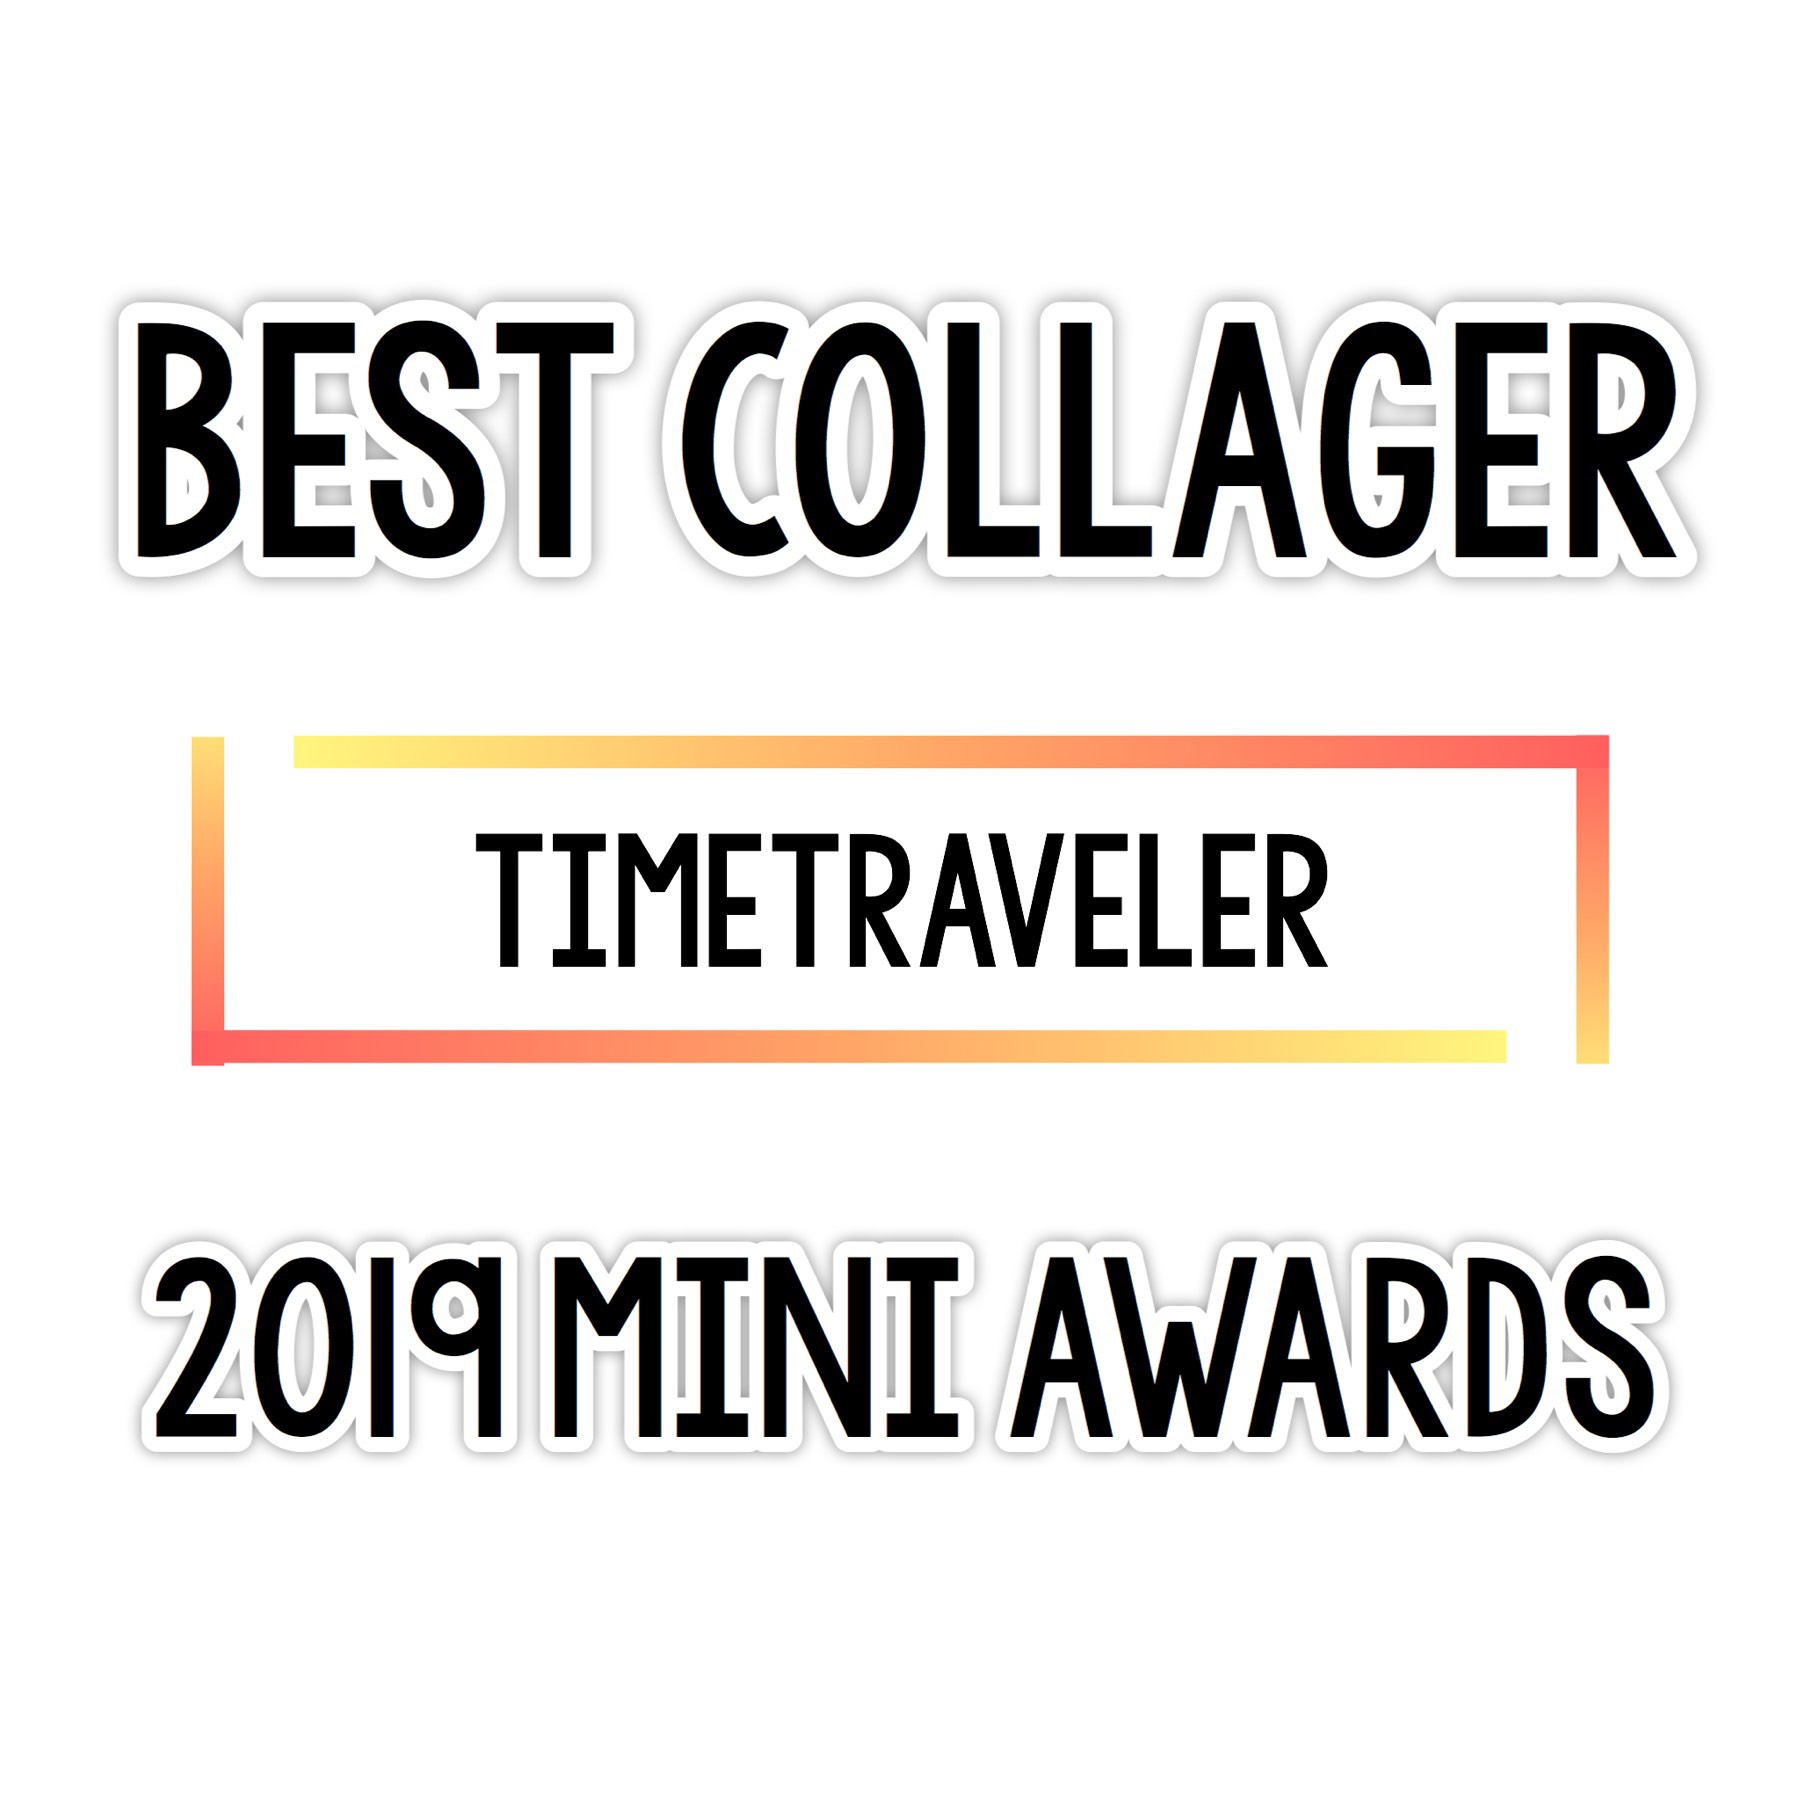 Congratulations timetraveler !